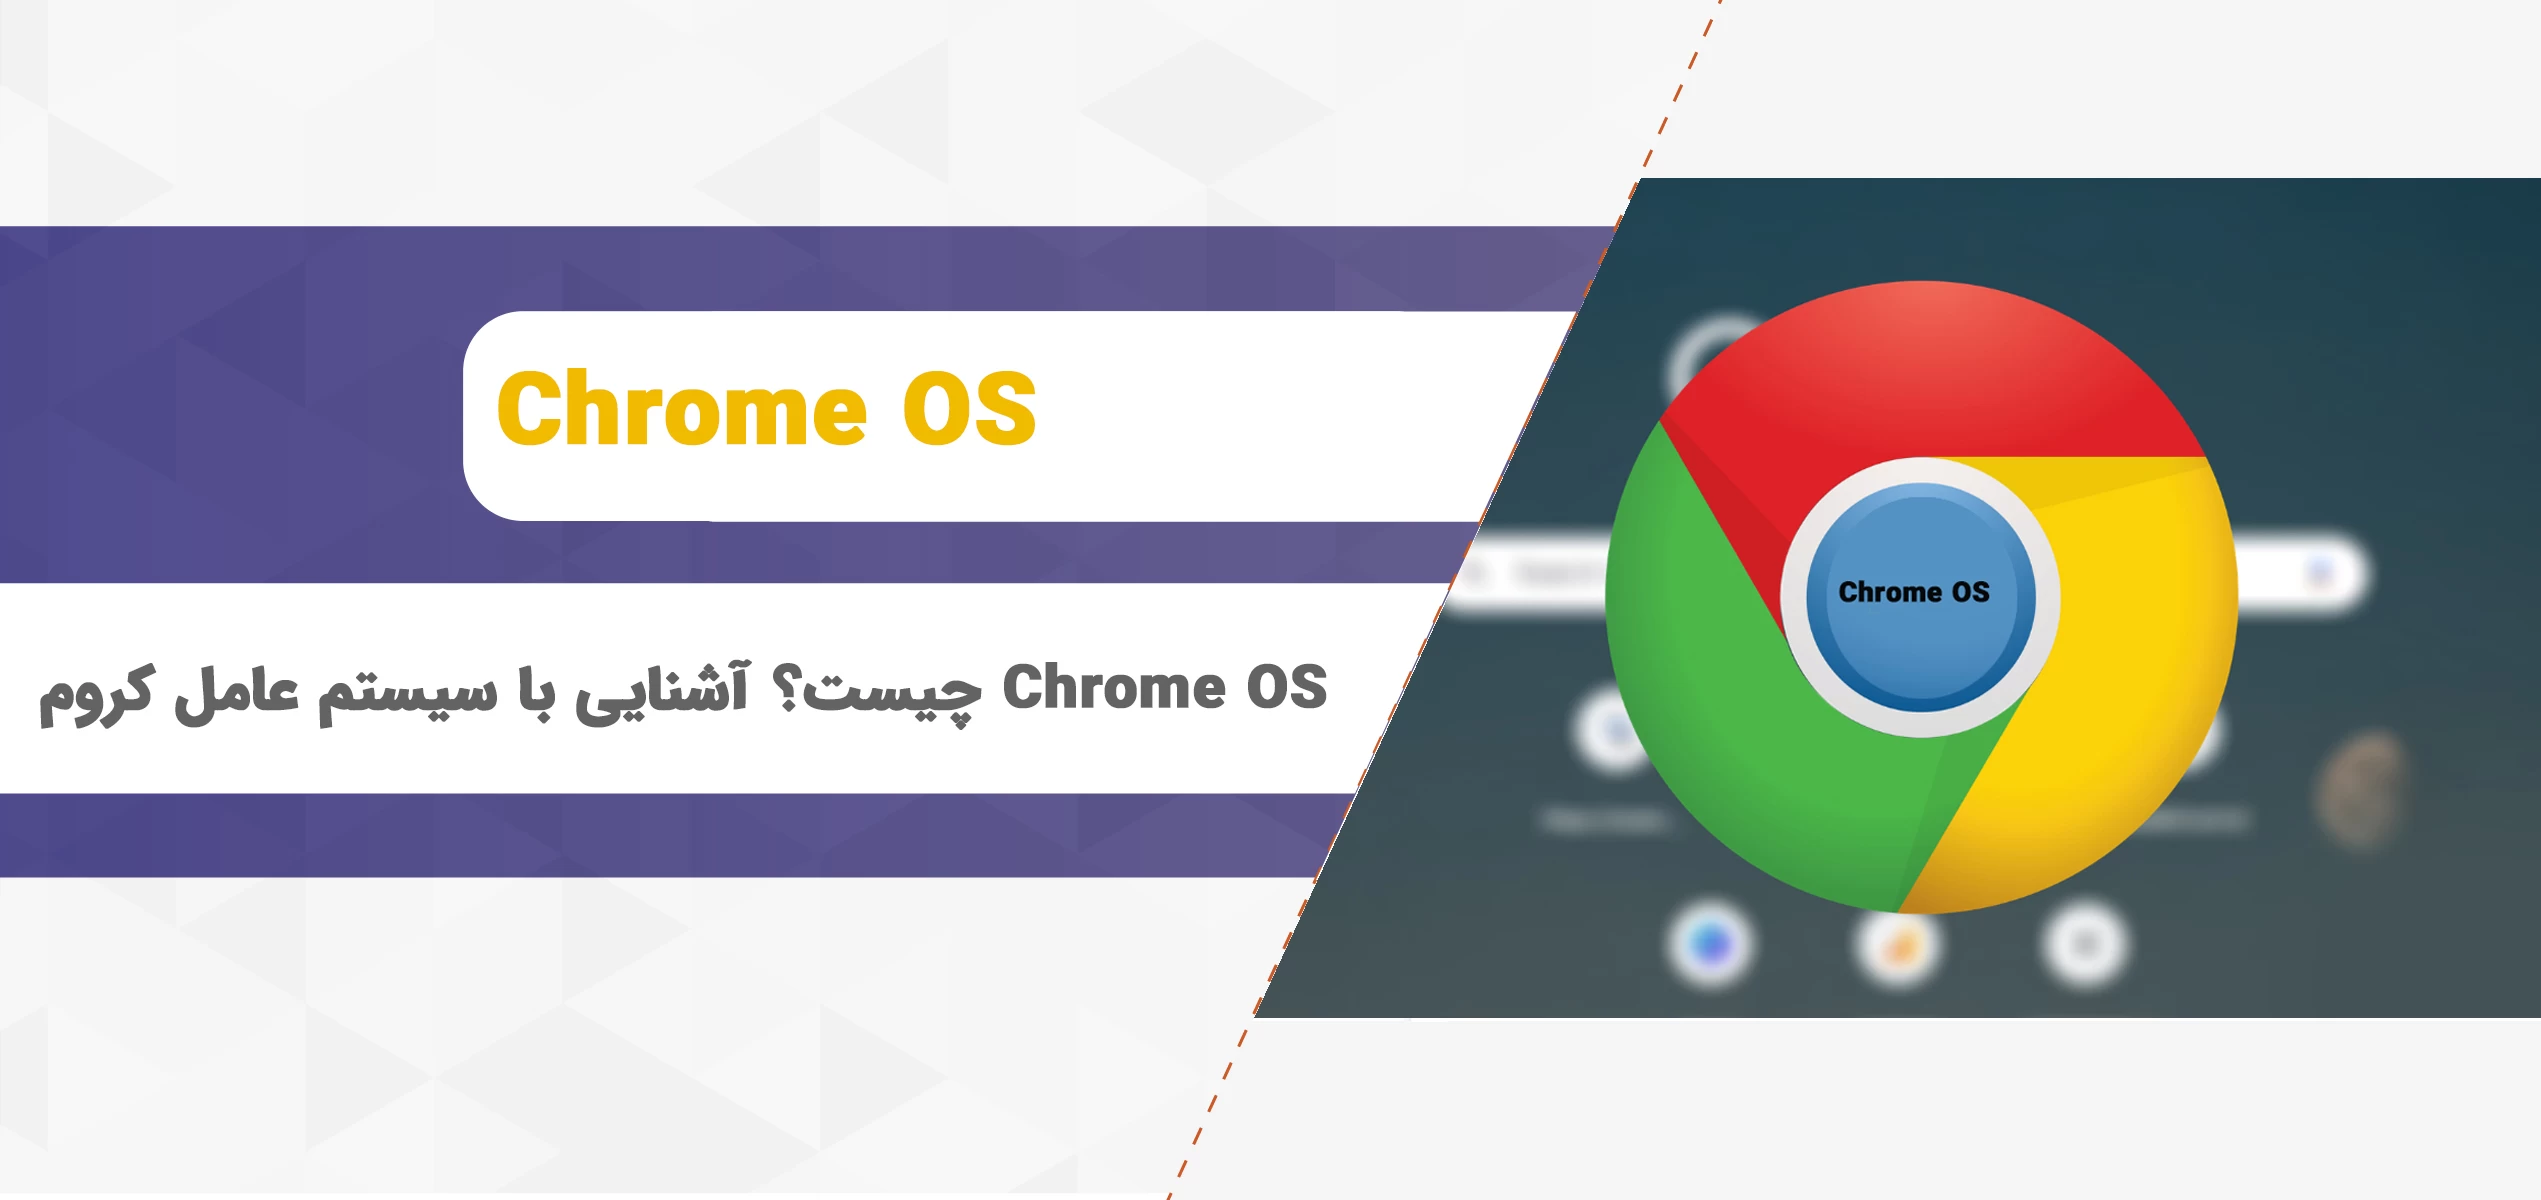 Chrome OS چیست؟ آشنایی با سیستم عامل کروم و Chromebook